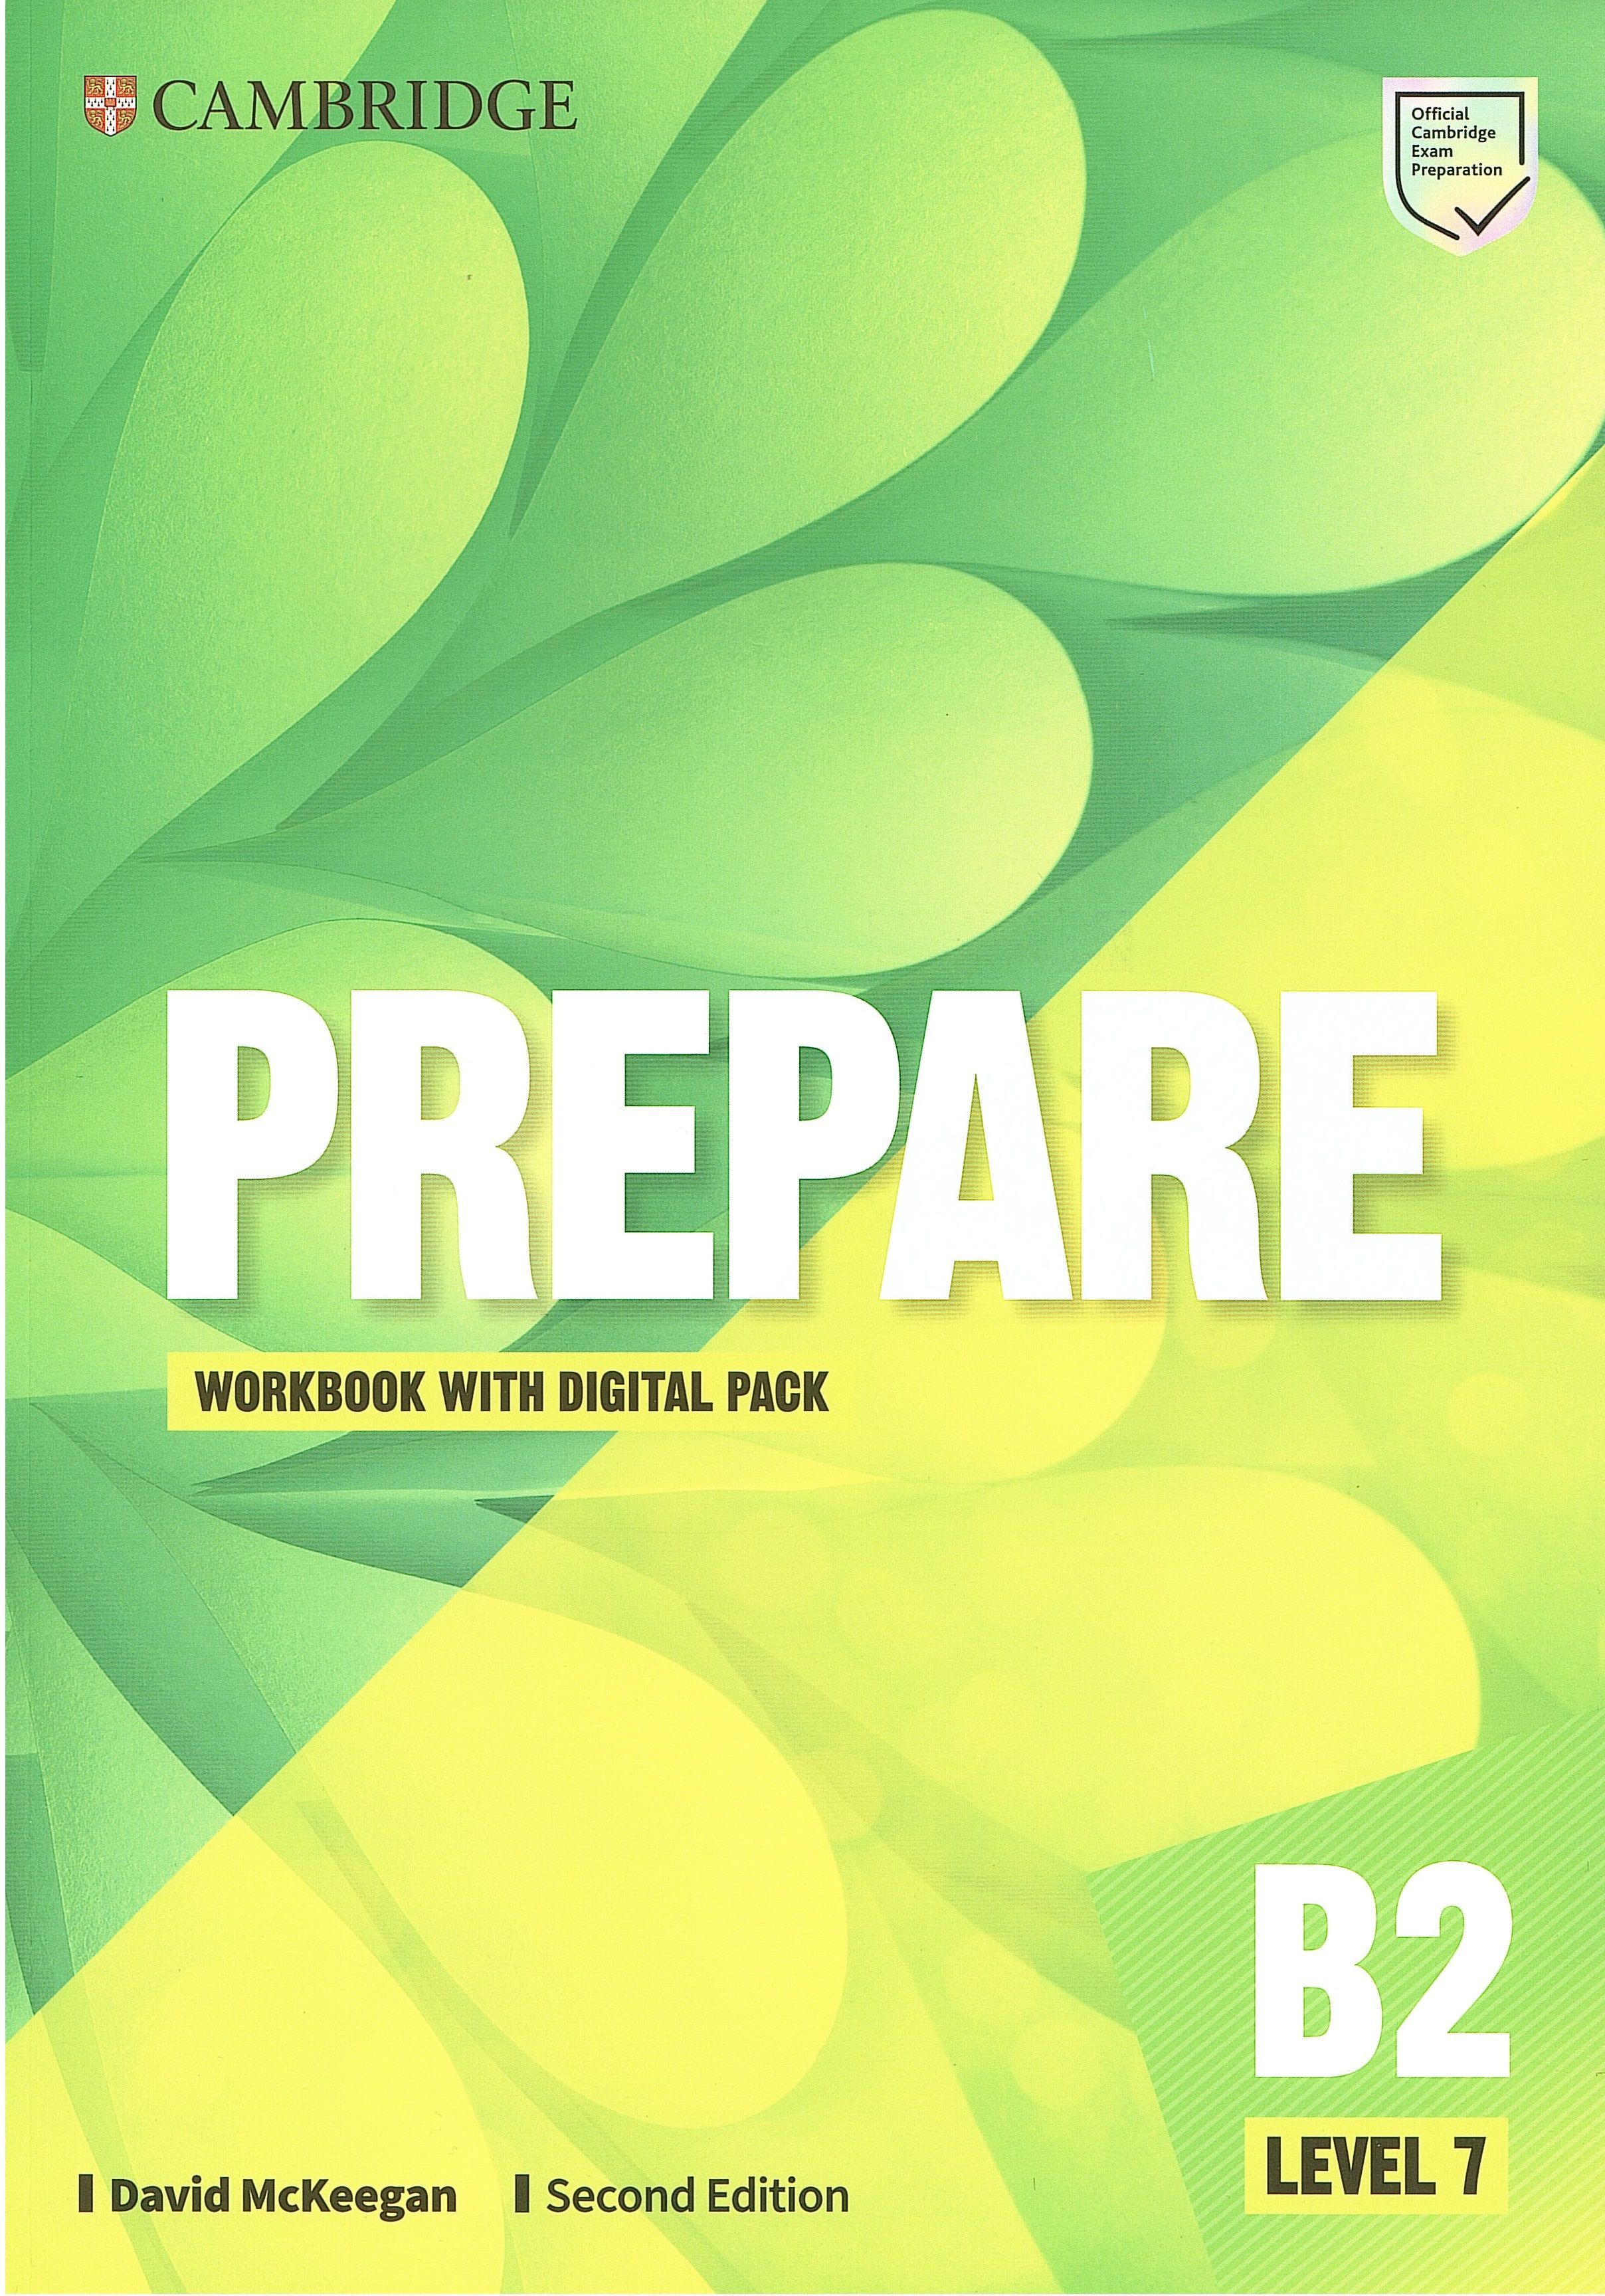 Prepare workbook. Cambridge English Workbook Level 7 prepare second Edition. Prepare 7 2nd Edition. Prepare second Edition Level 7. Учебник prepare 7.